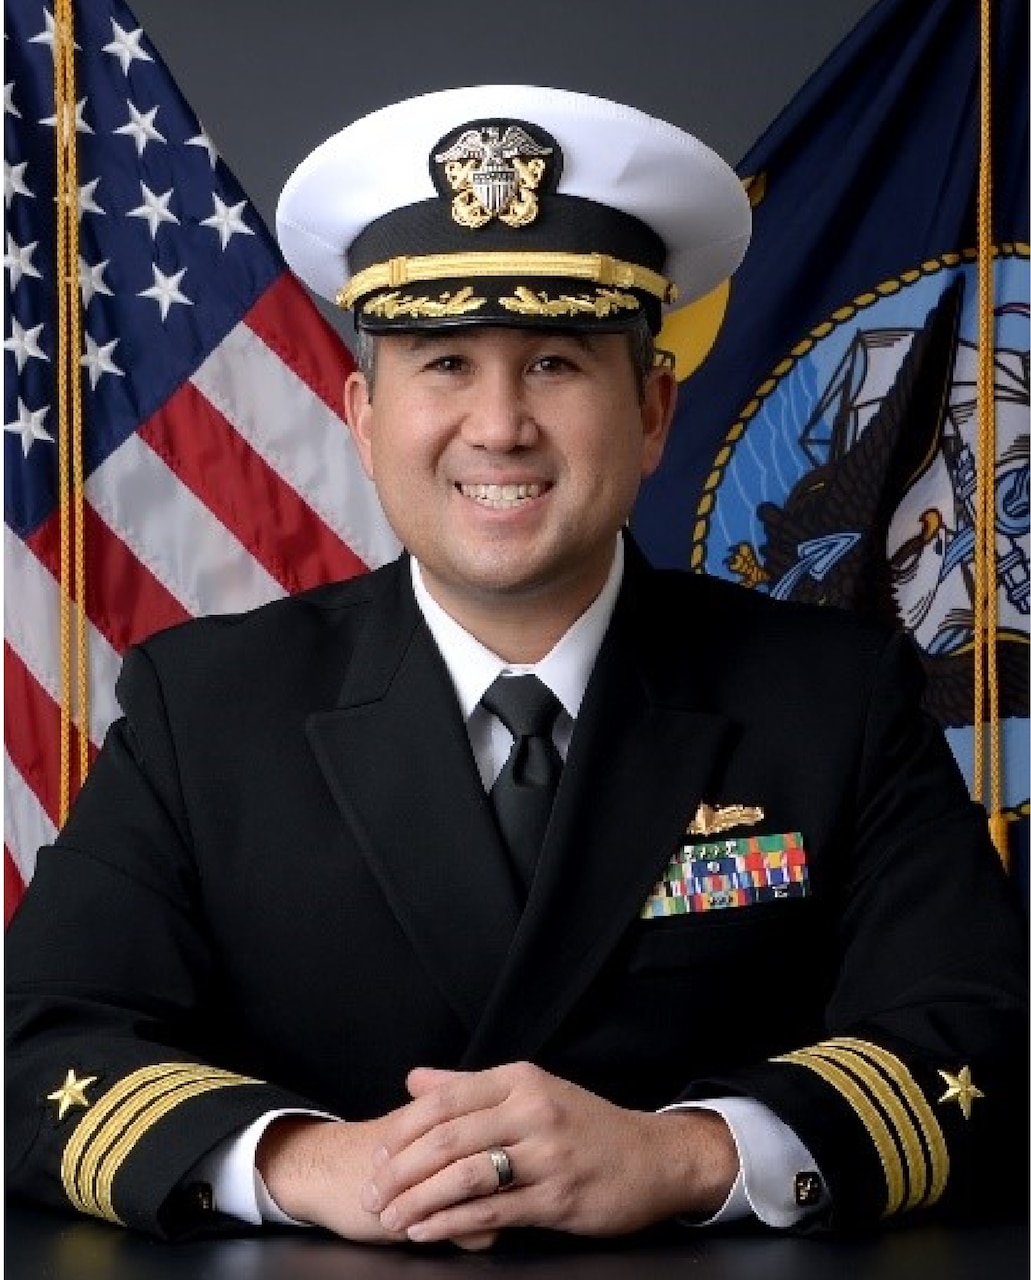 Commander Ryan R. Downing